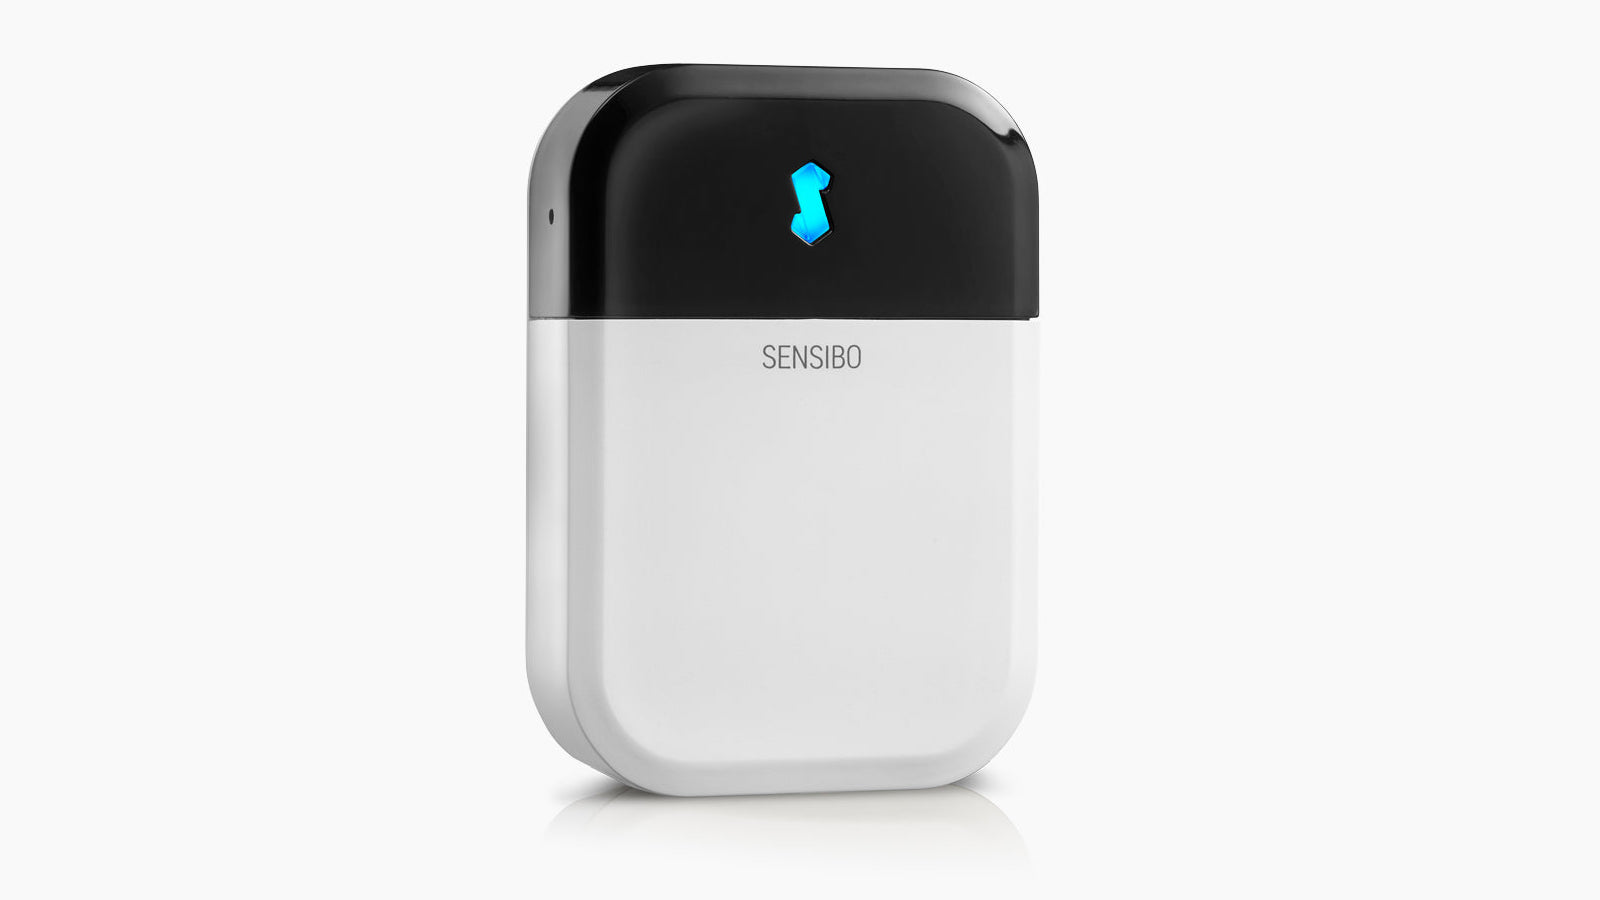 Sensibo smart air conditioner